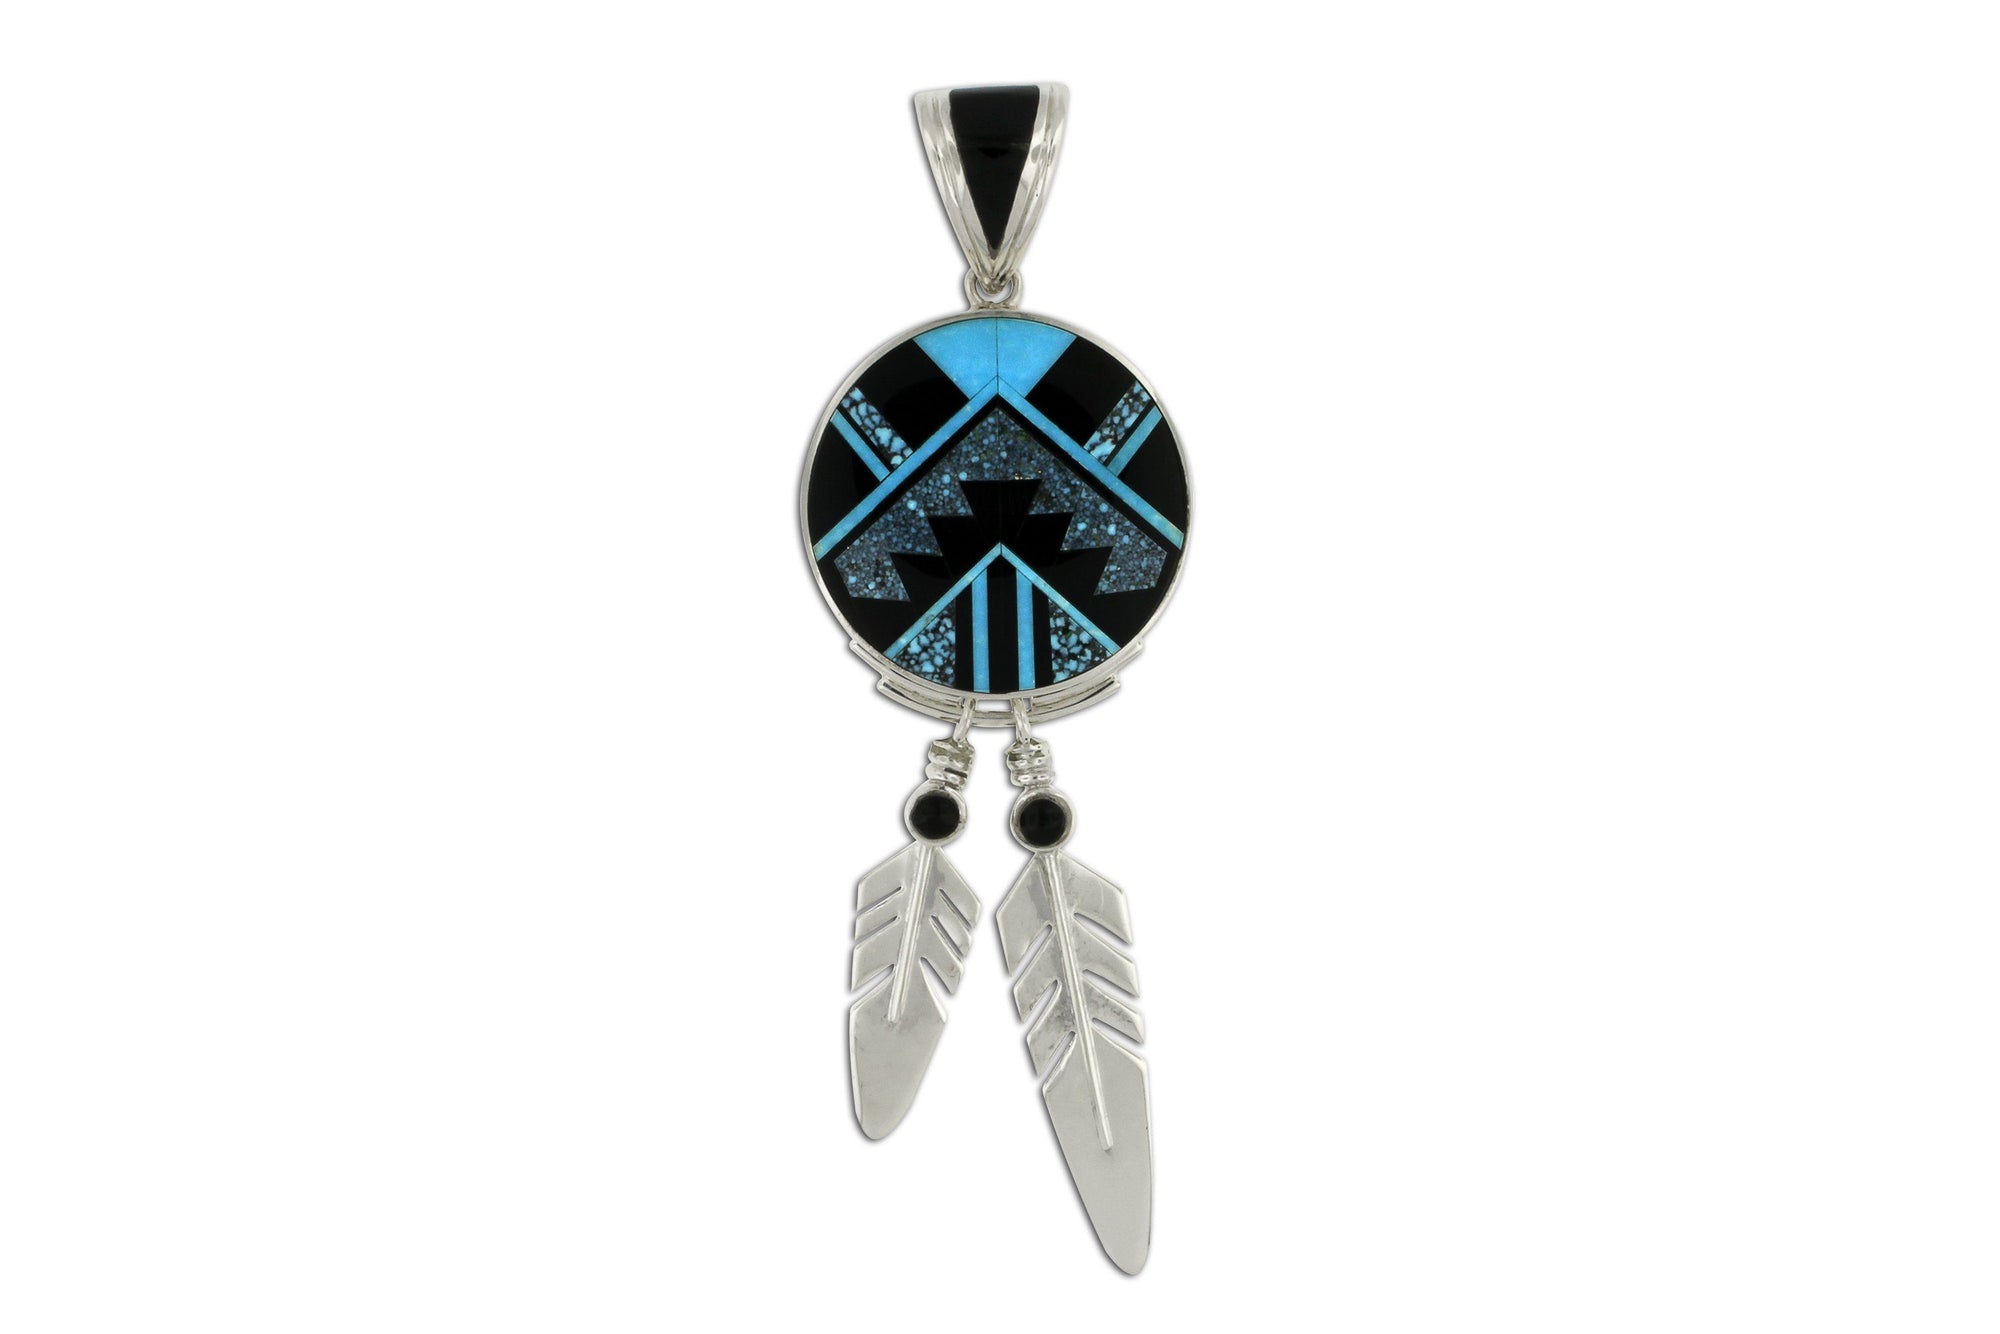 David Rosales Shadow Peak Feather Pendant - Turquoise Jewelry